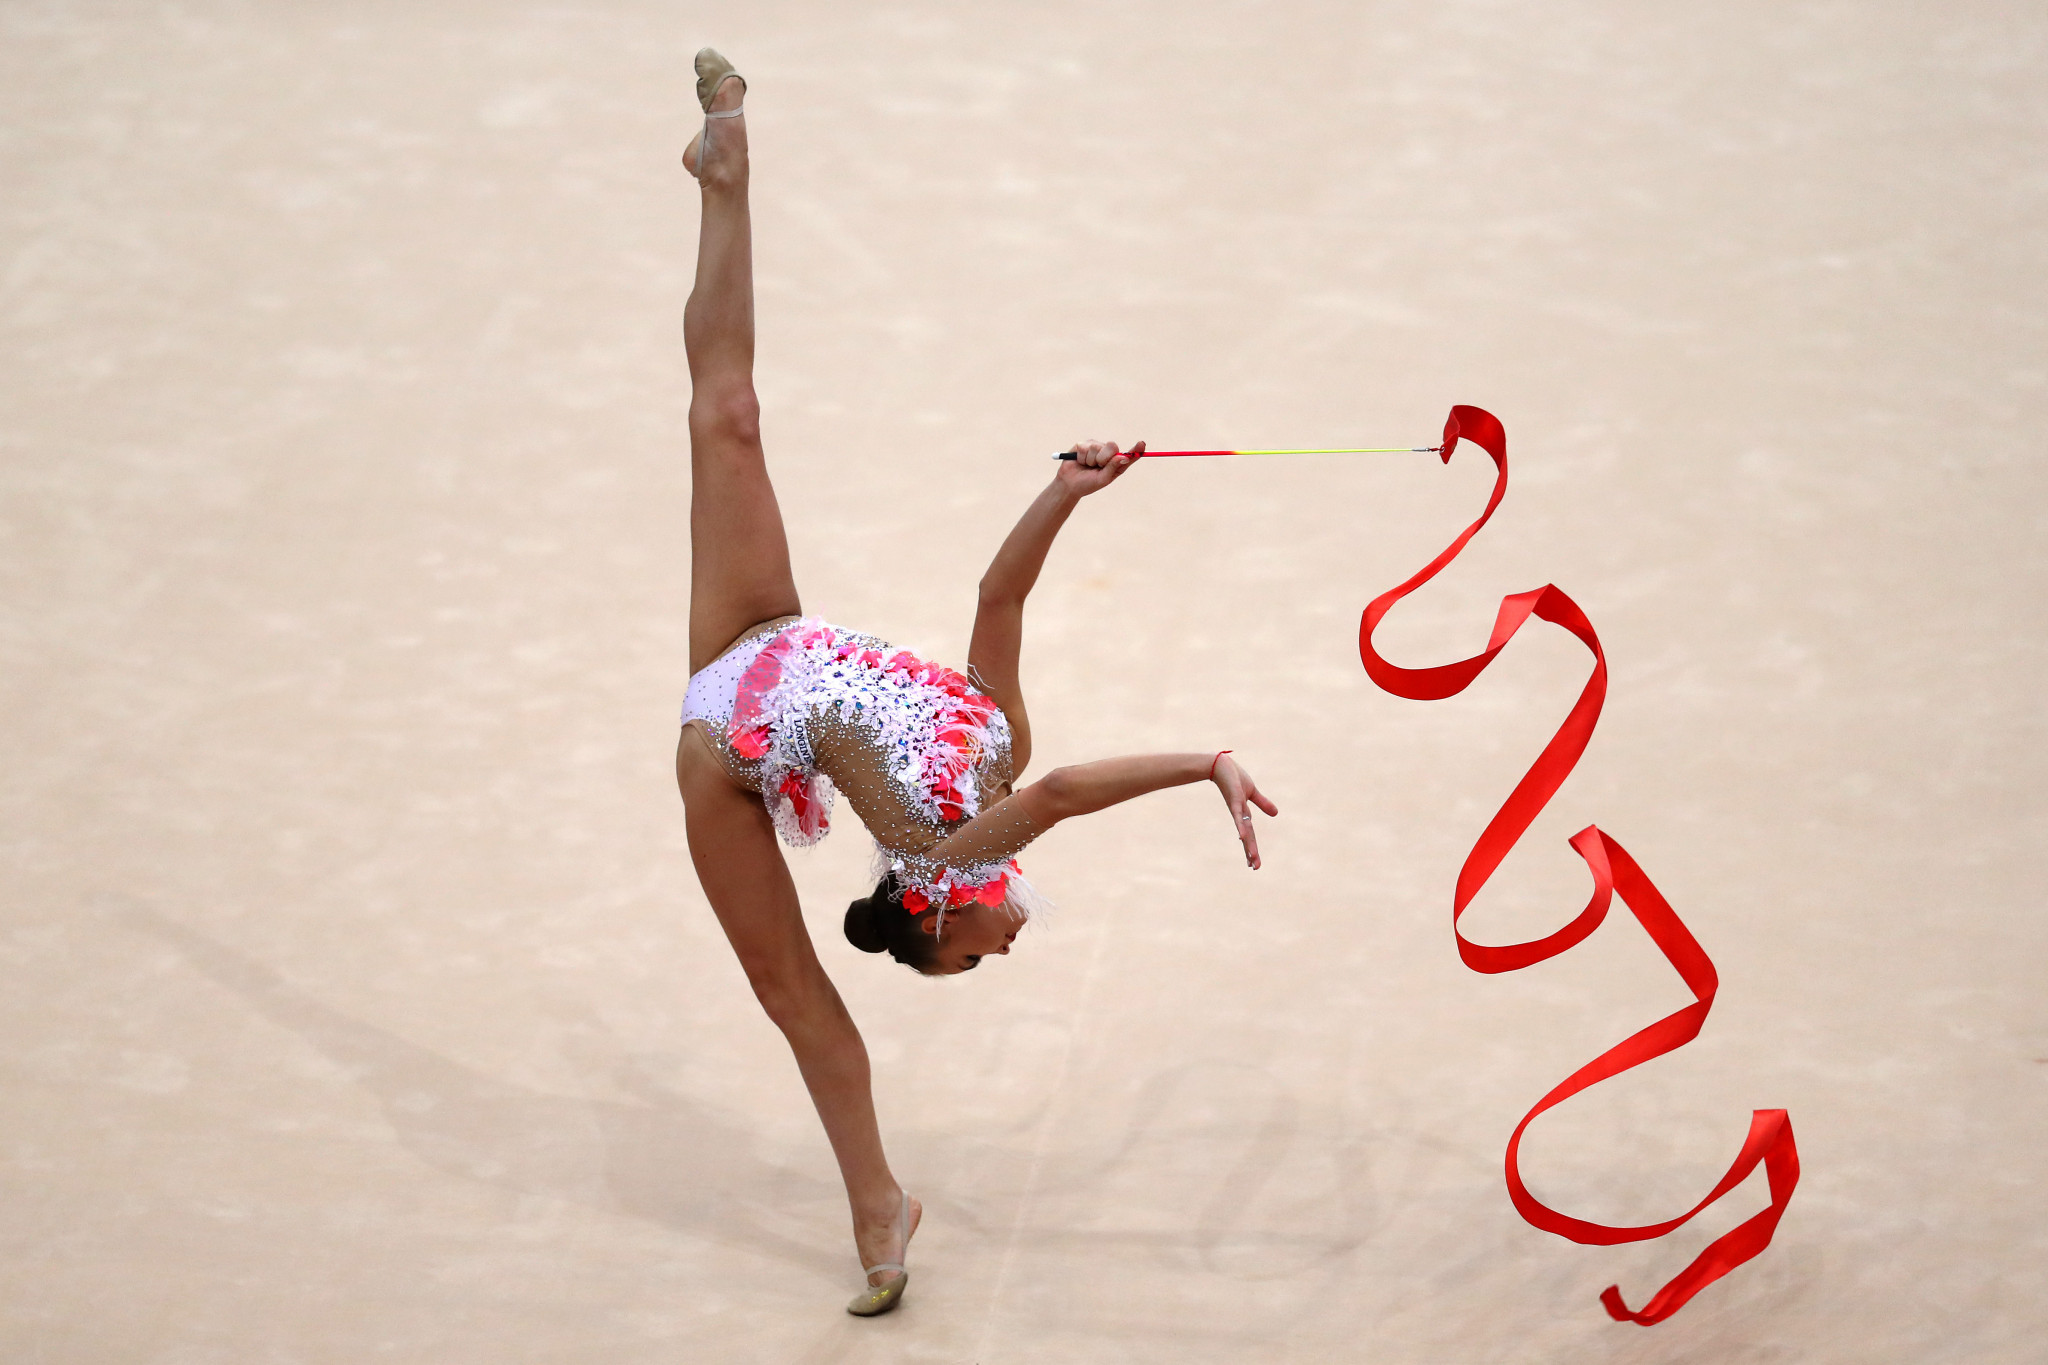 Averina twins headline star-studded European Rhythmic Gymnastics Championships field